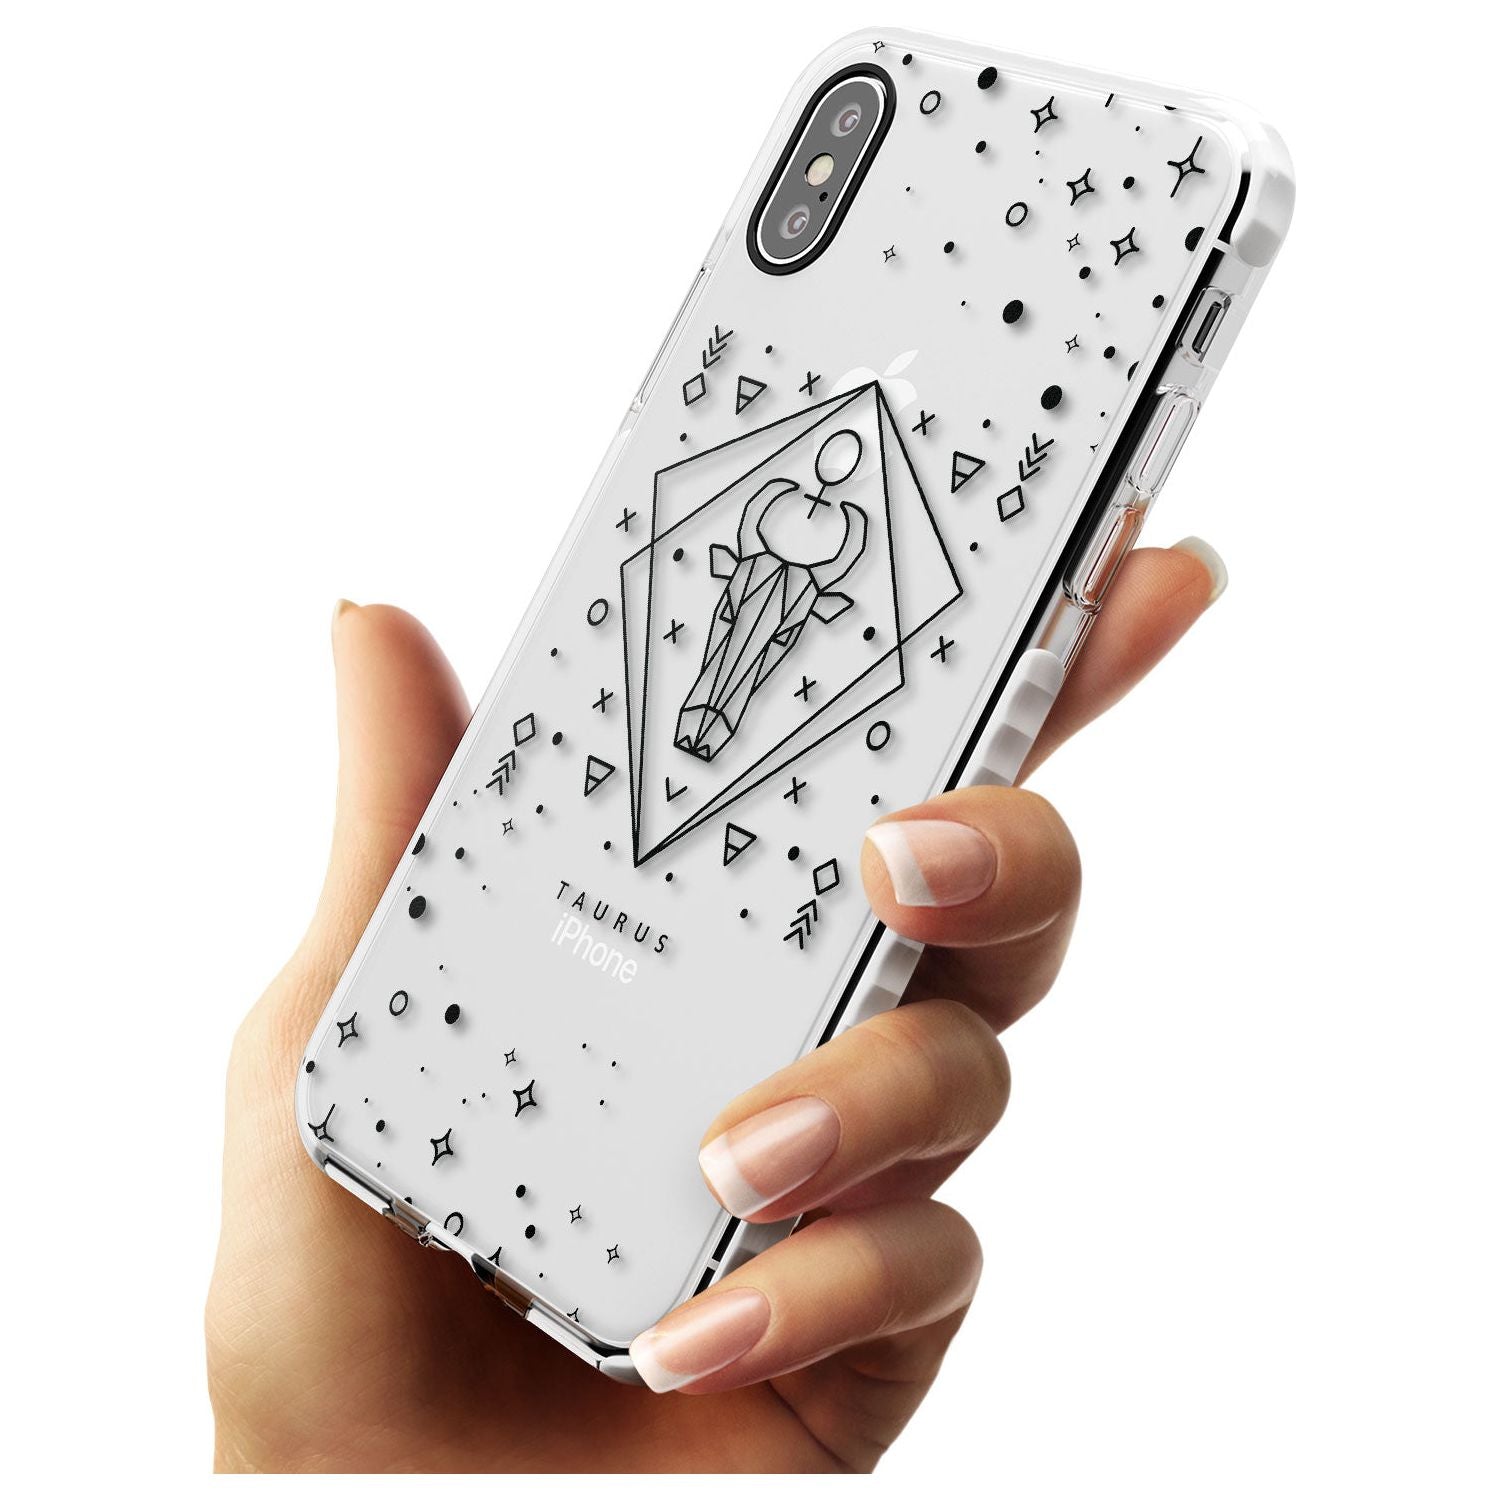 Taurus Emblem - Transparent Design Impact Phone Case for iPhone X XS Max XR